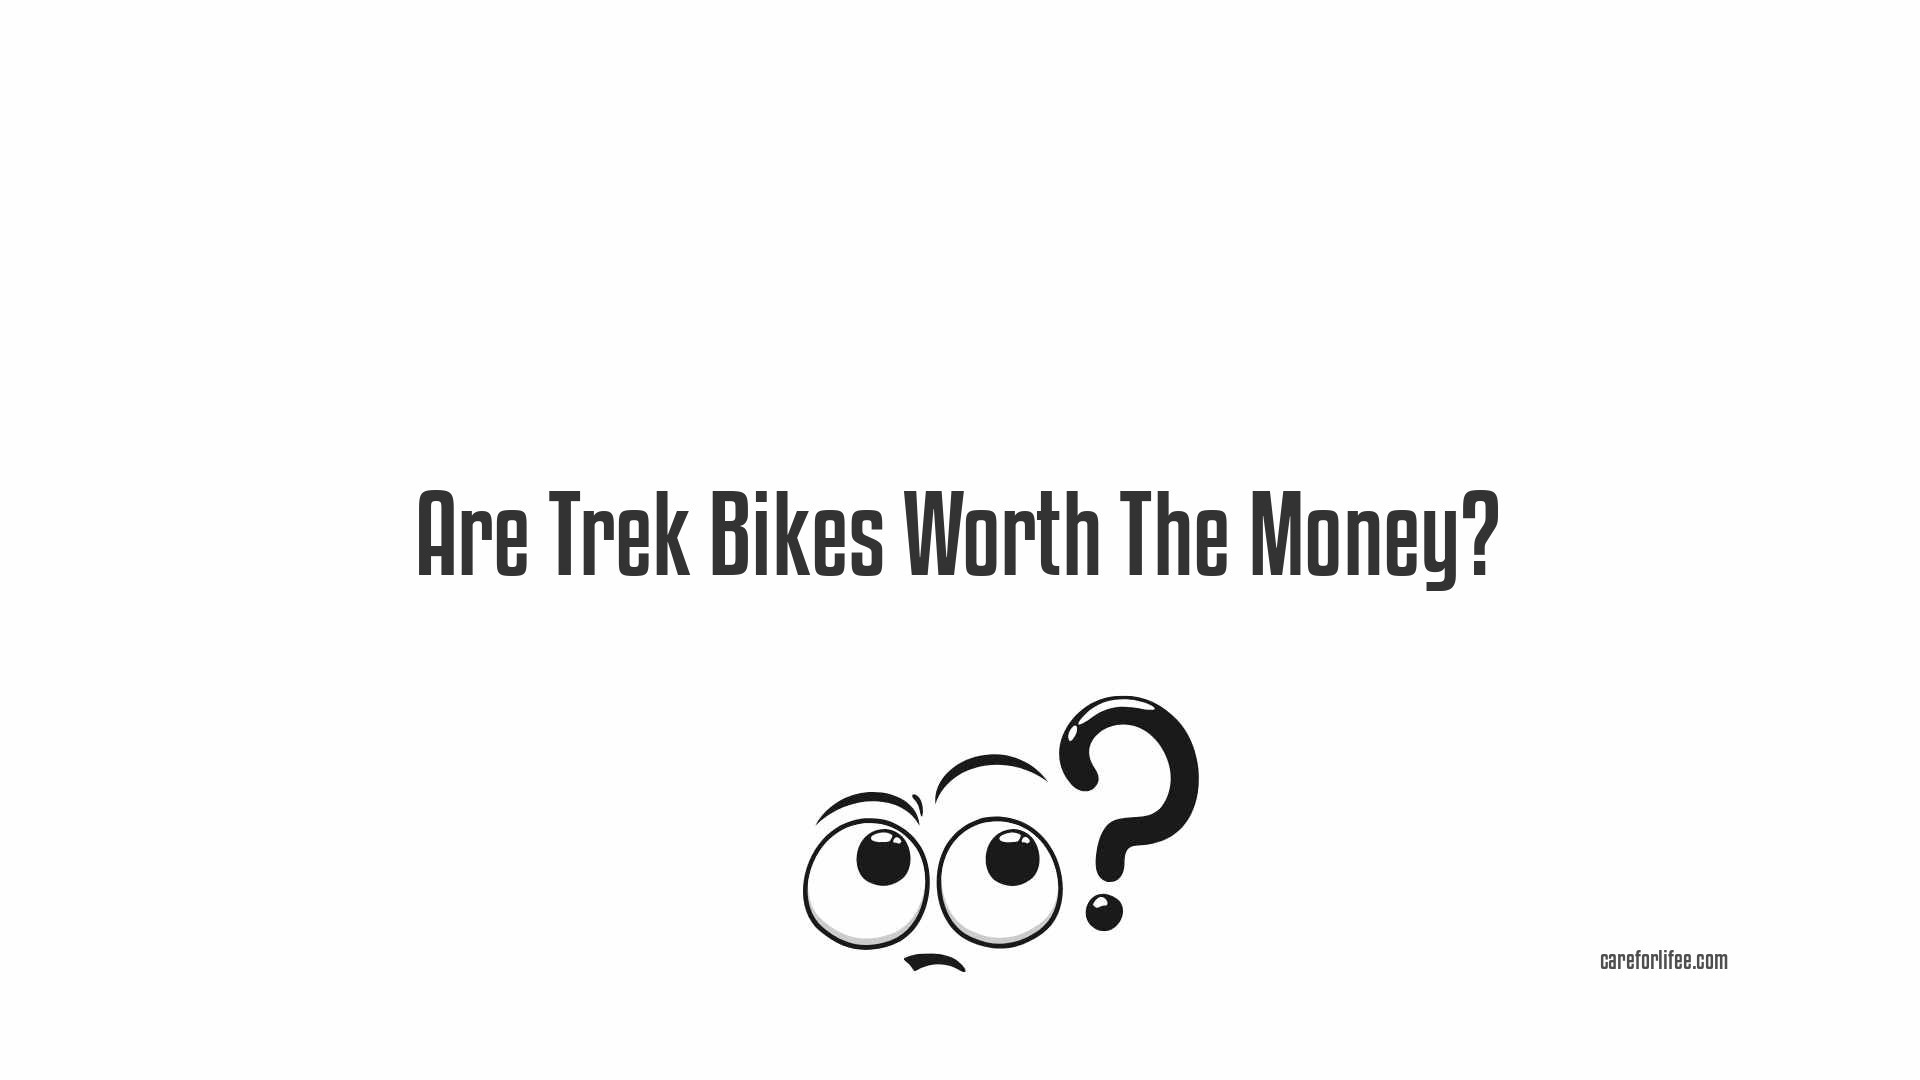 Are Trek Bikes Worth The Money?